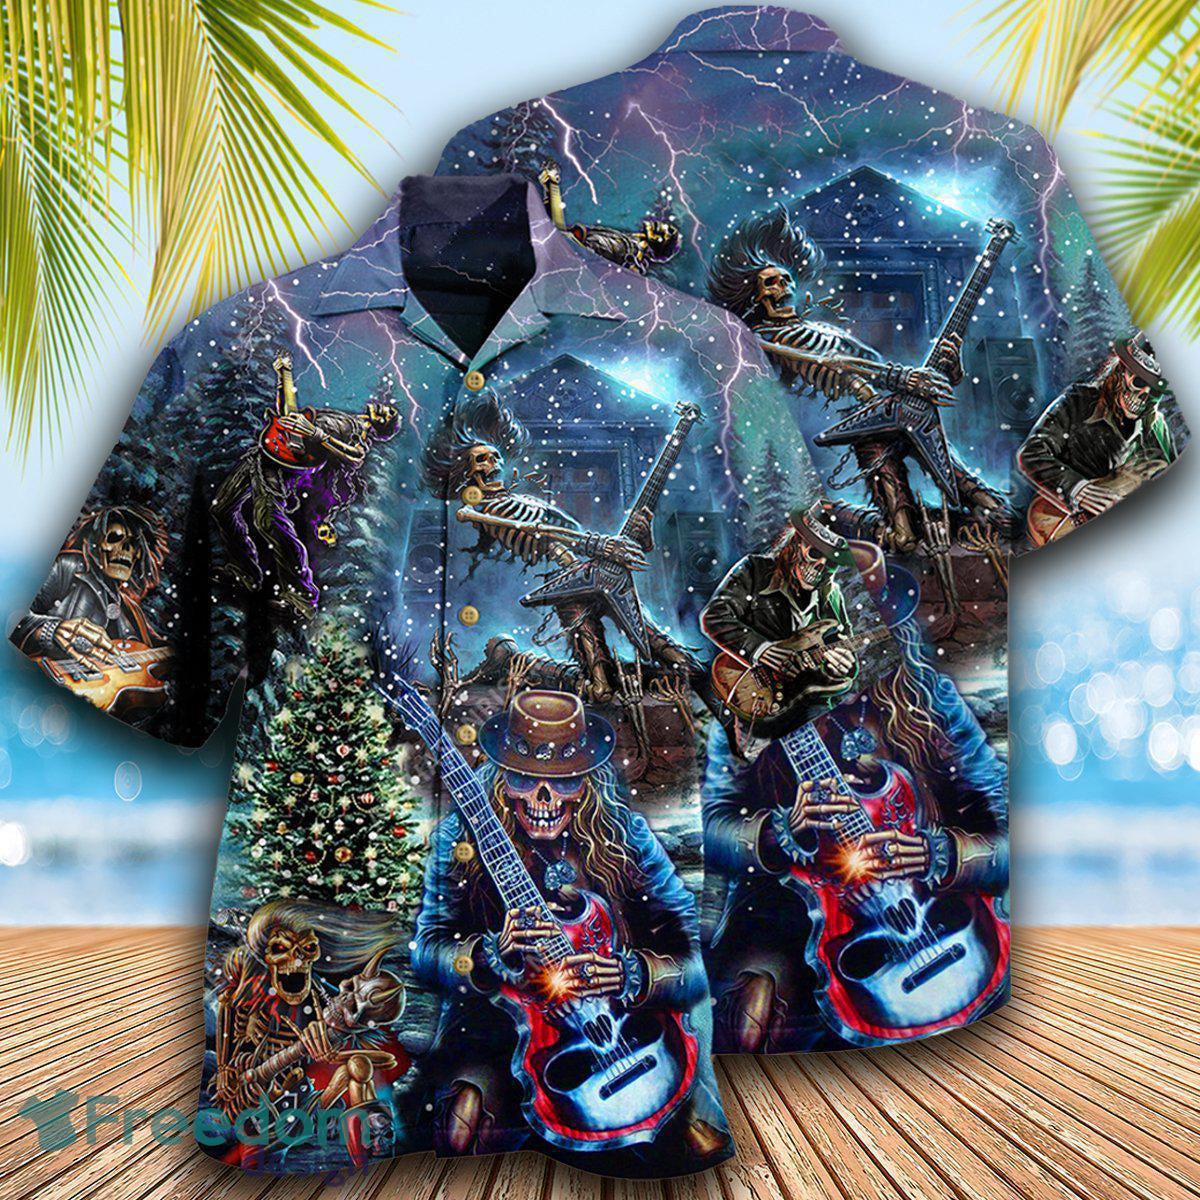 Skull Planet Galaxy Hawaiian Shirt For Men And Women - Freedomdesign